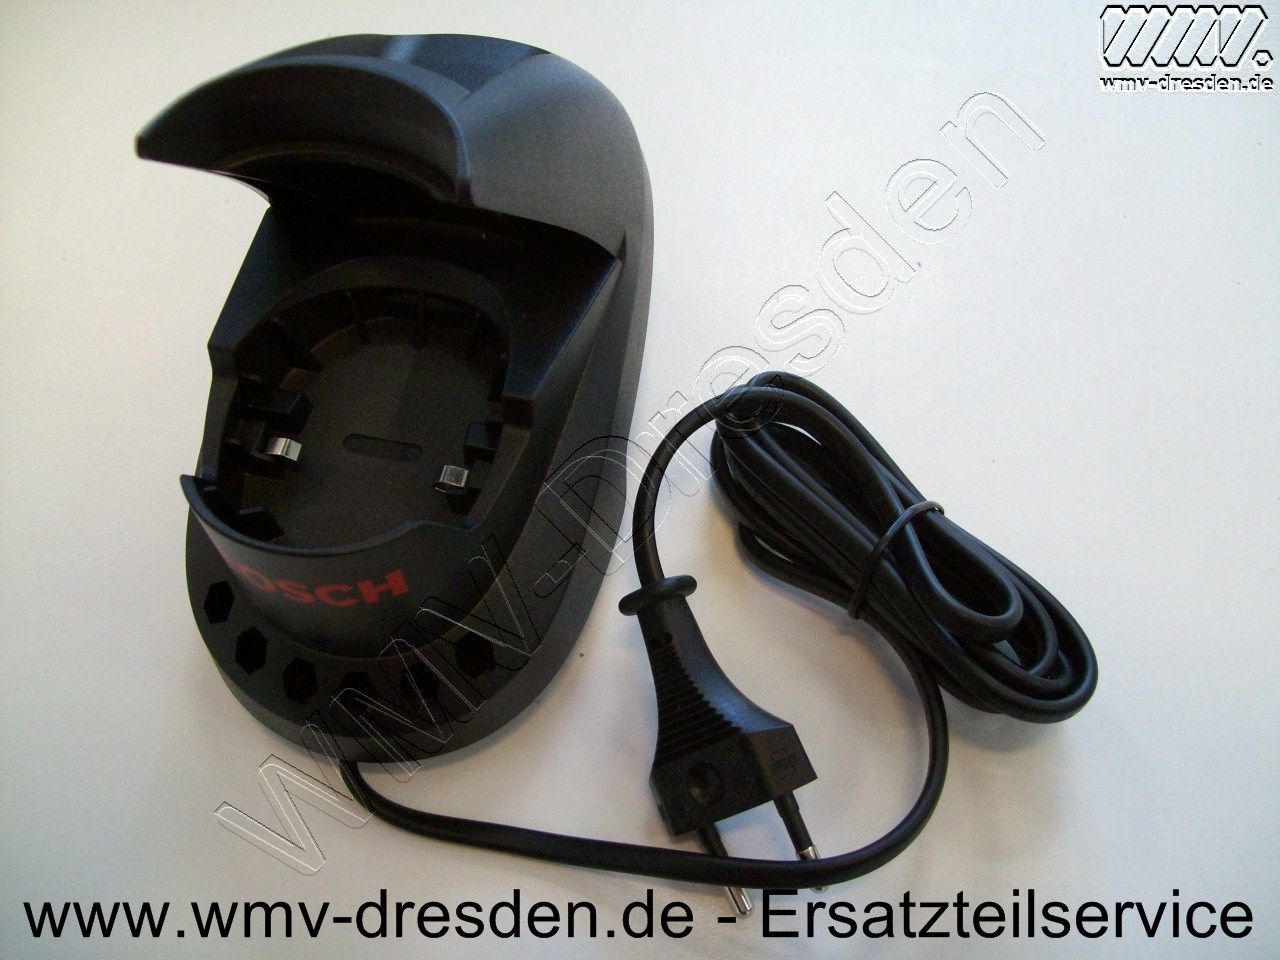 Artikel 2607225489-B17 Hersteller: Bosch-Skil-Dremel 